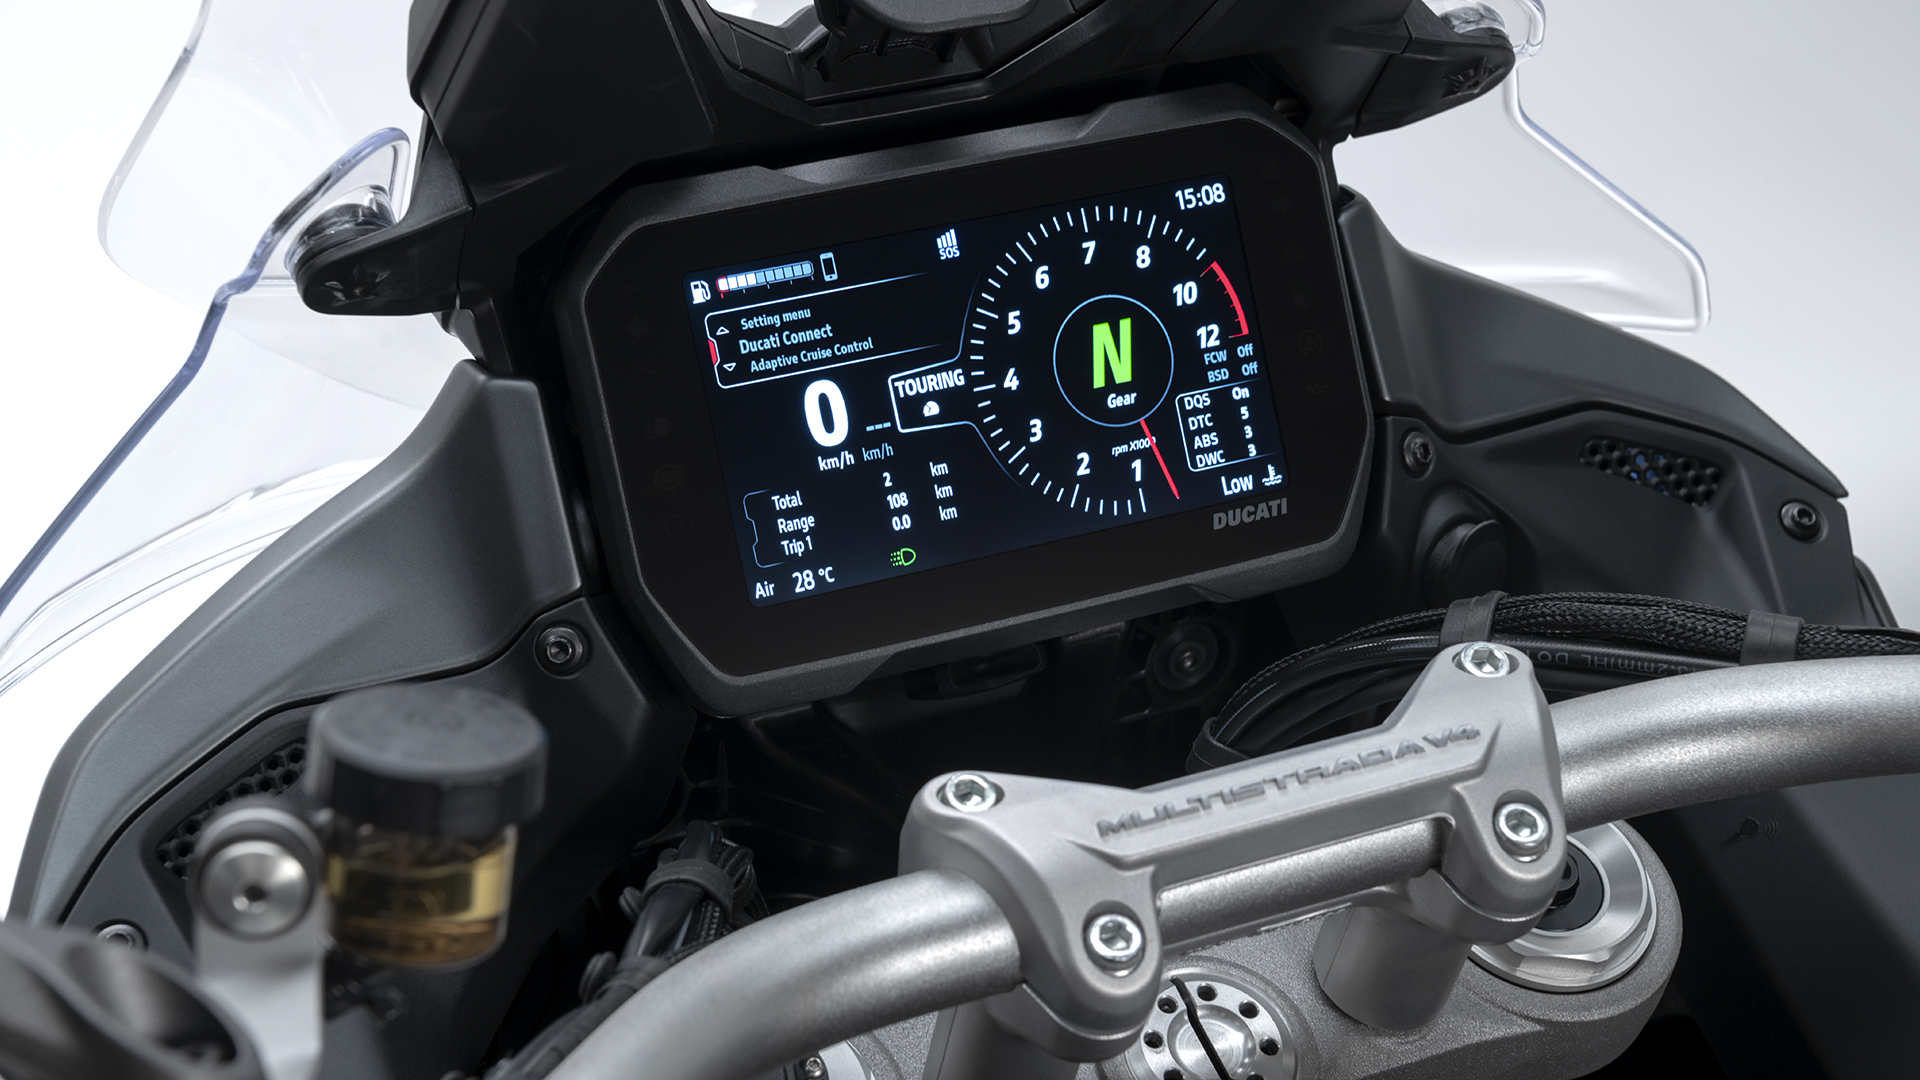 Electronics | New Multistrada V4 Ducati